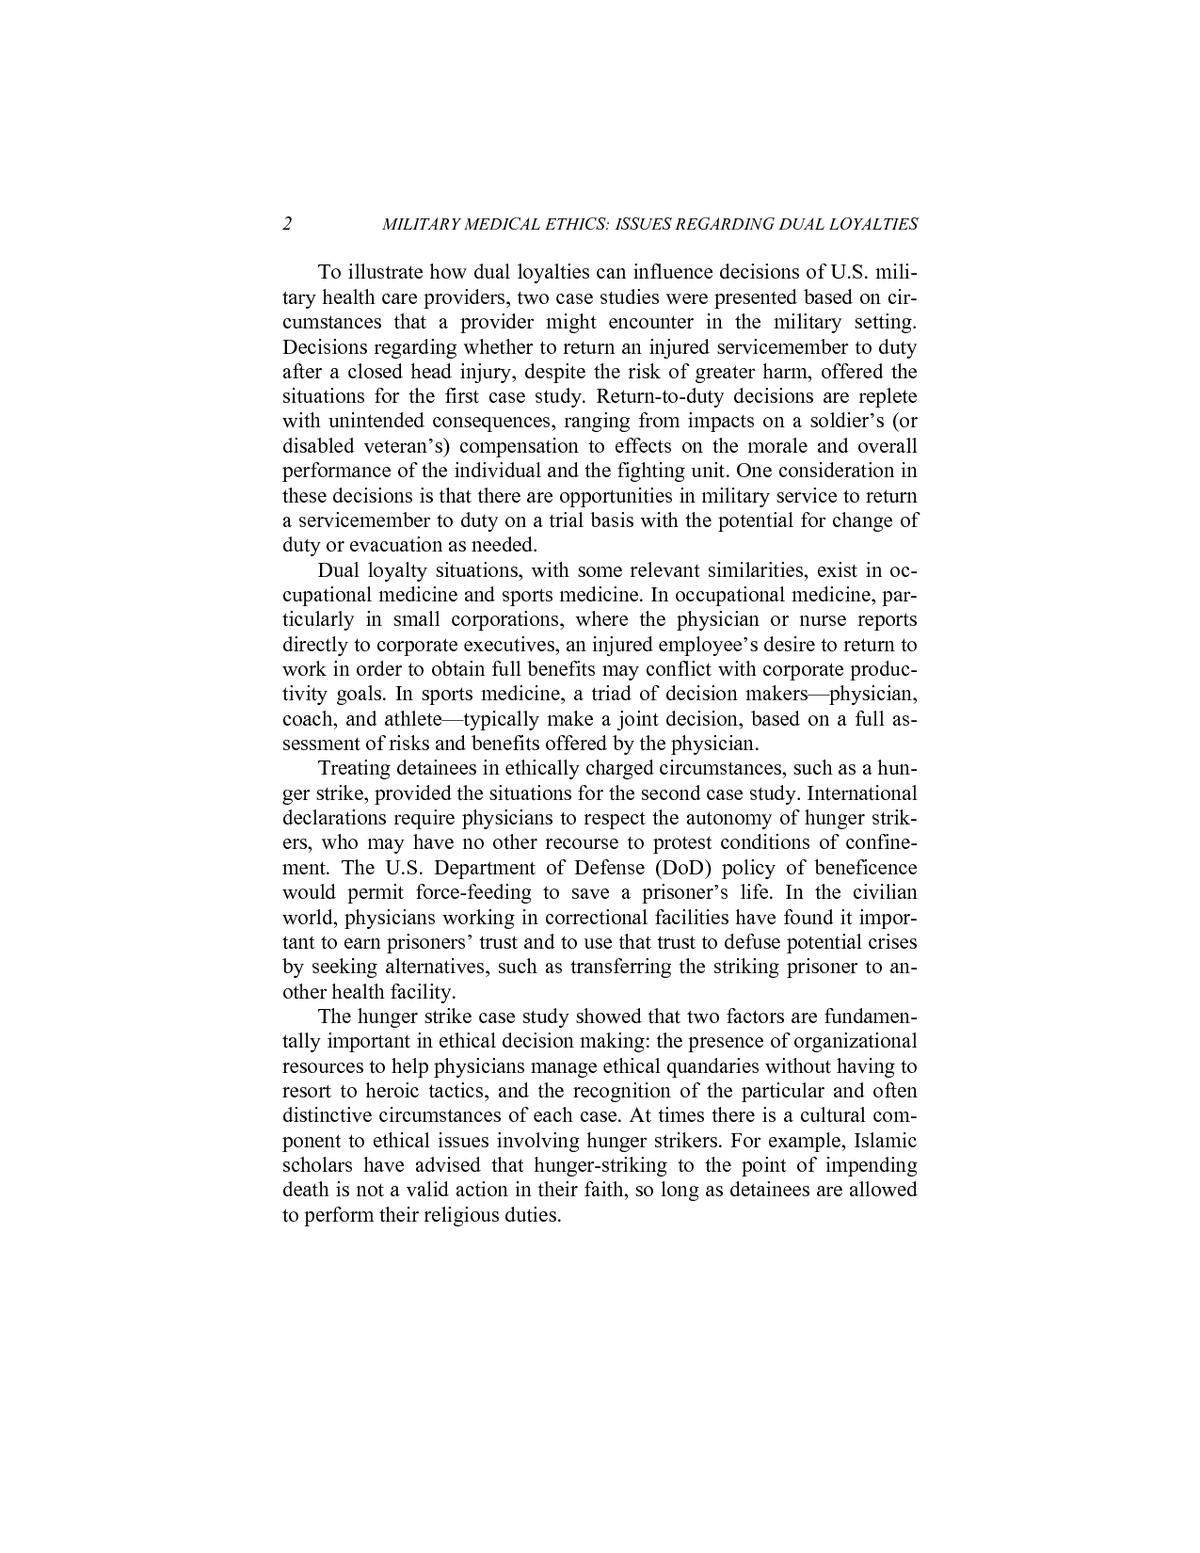 Summary Military Medical Ethics Issues Regarding Dual Loyalties Workshop Summary The National Academies Press image